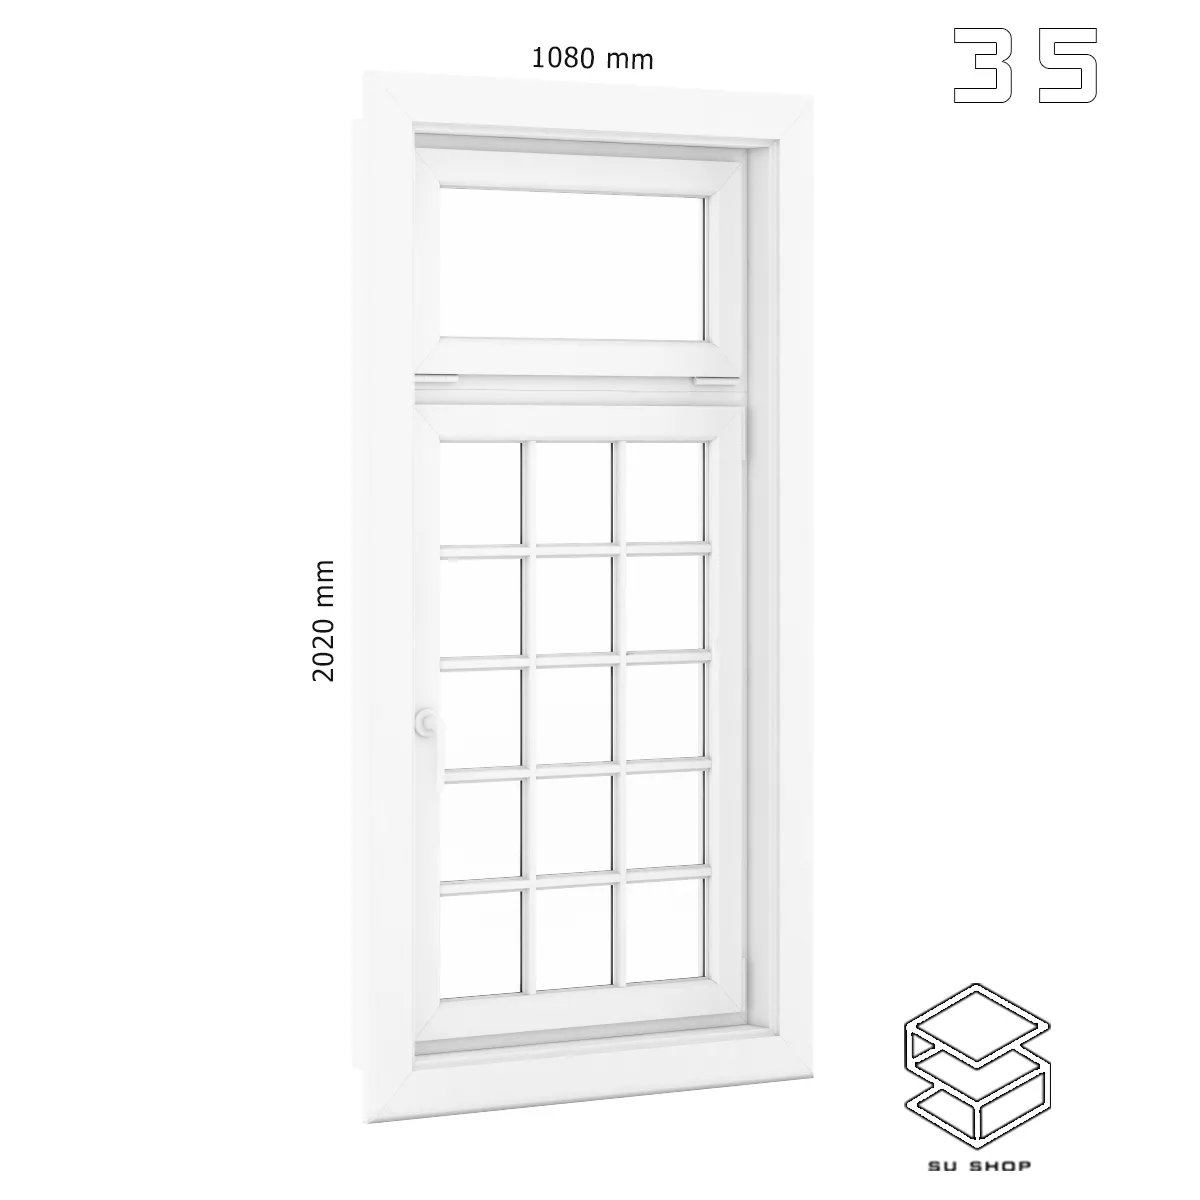 MODERN WINDOWS - SKETCHUP 3D MODEL - VRAY OR ENSCAPE - ID16776